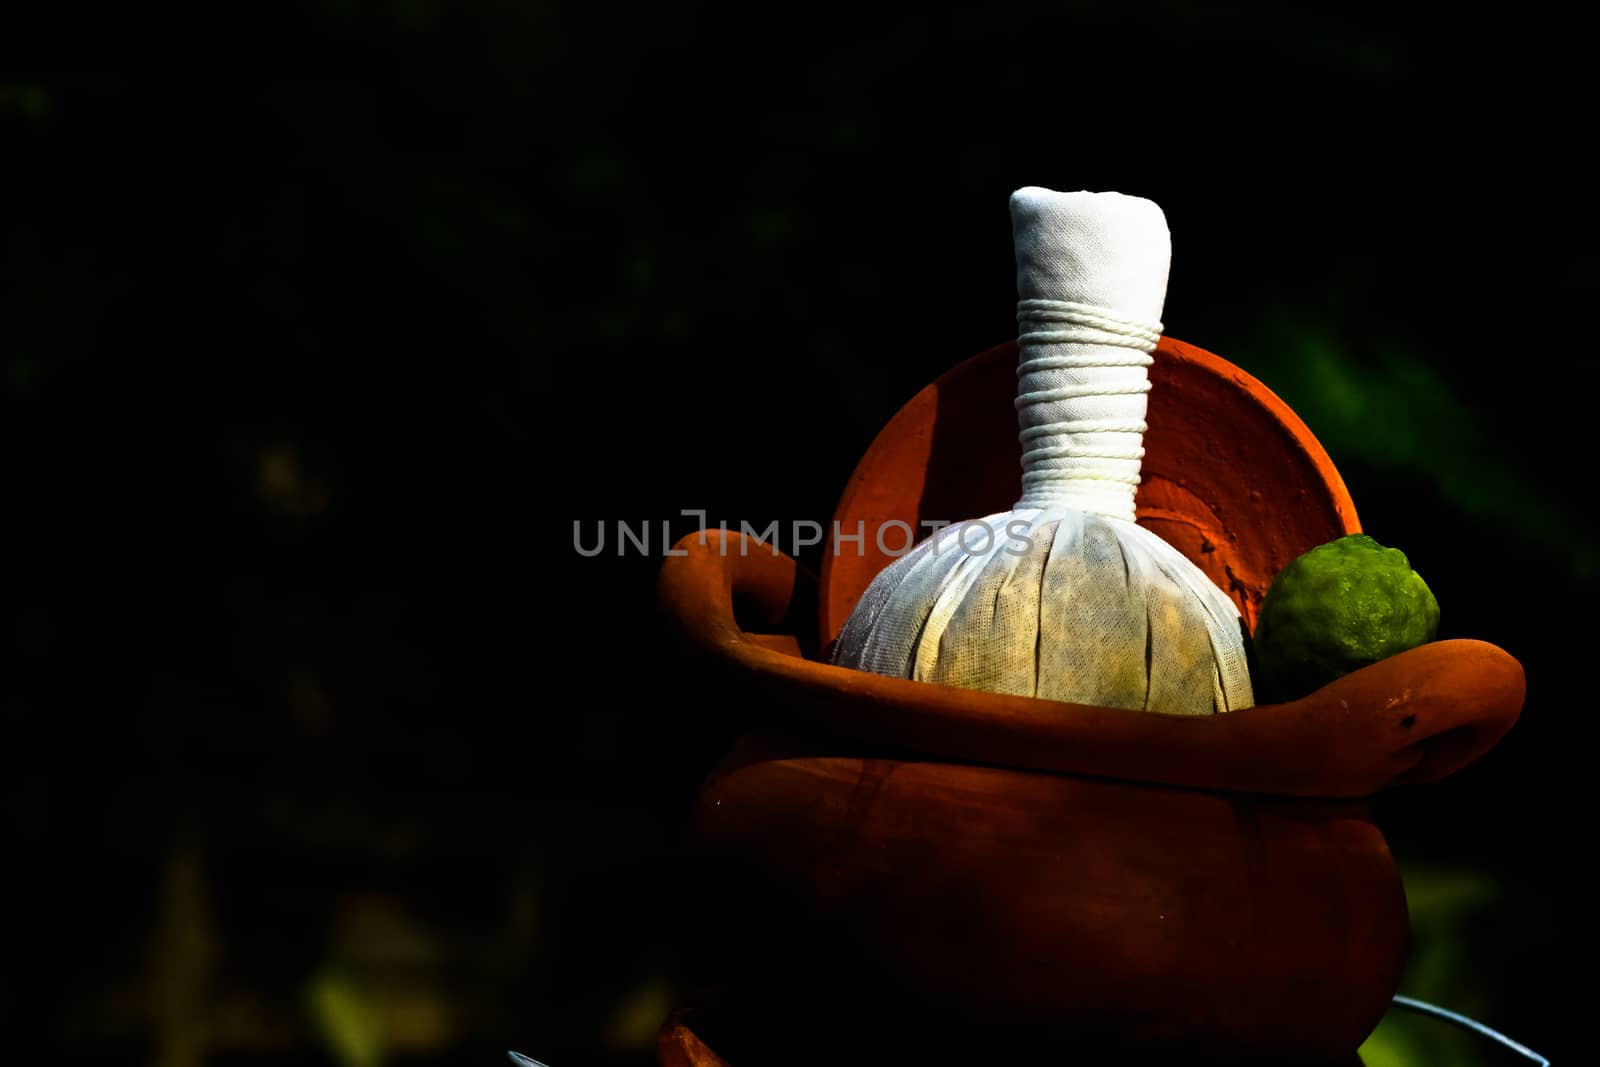 herbal compress ball for spa treatment  by nitimongkolchai